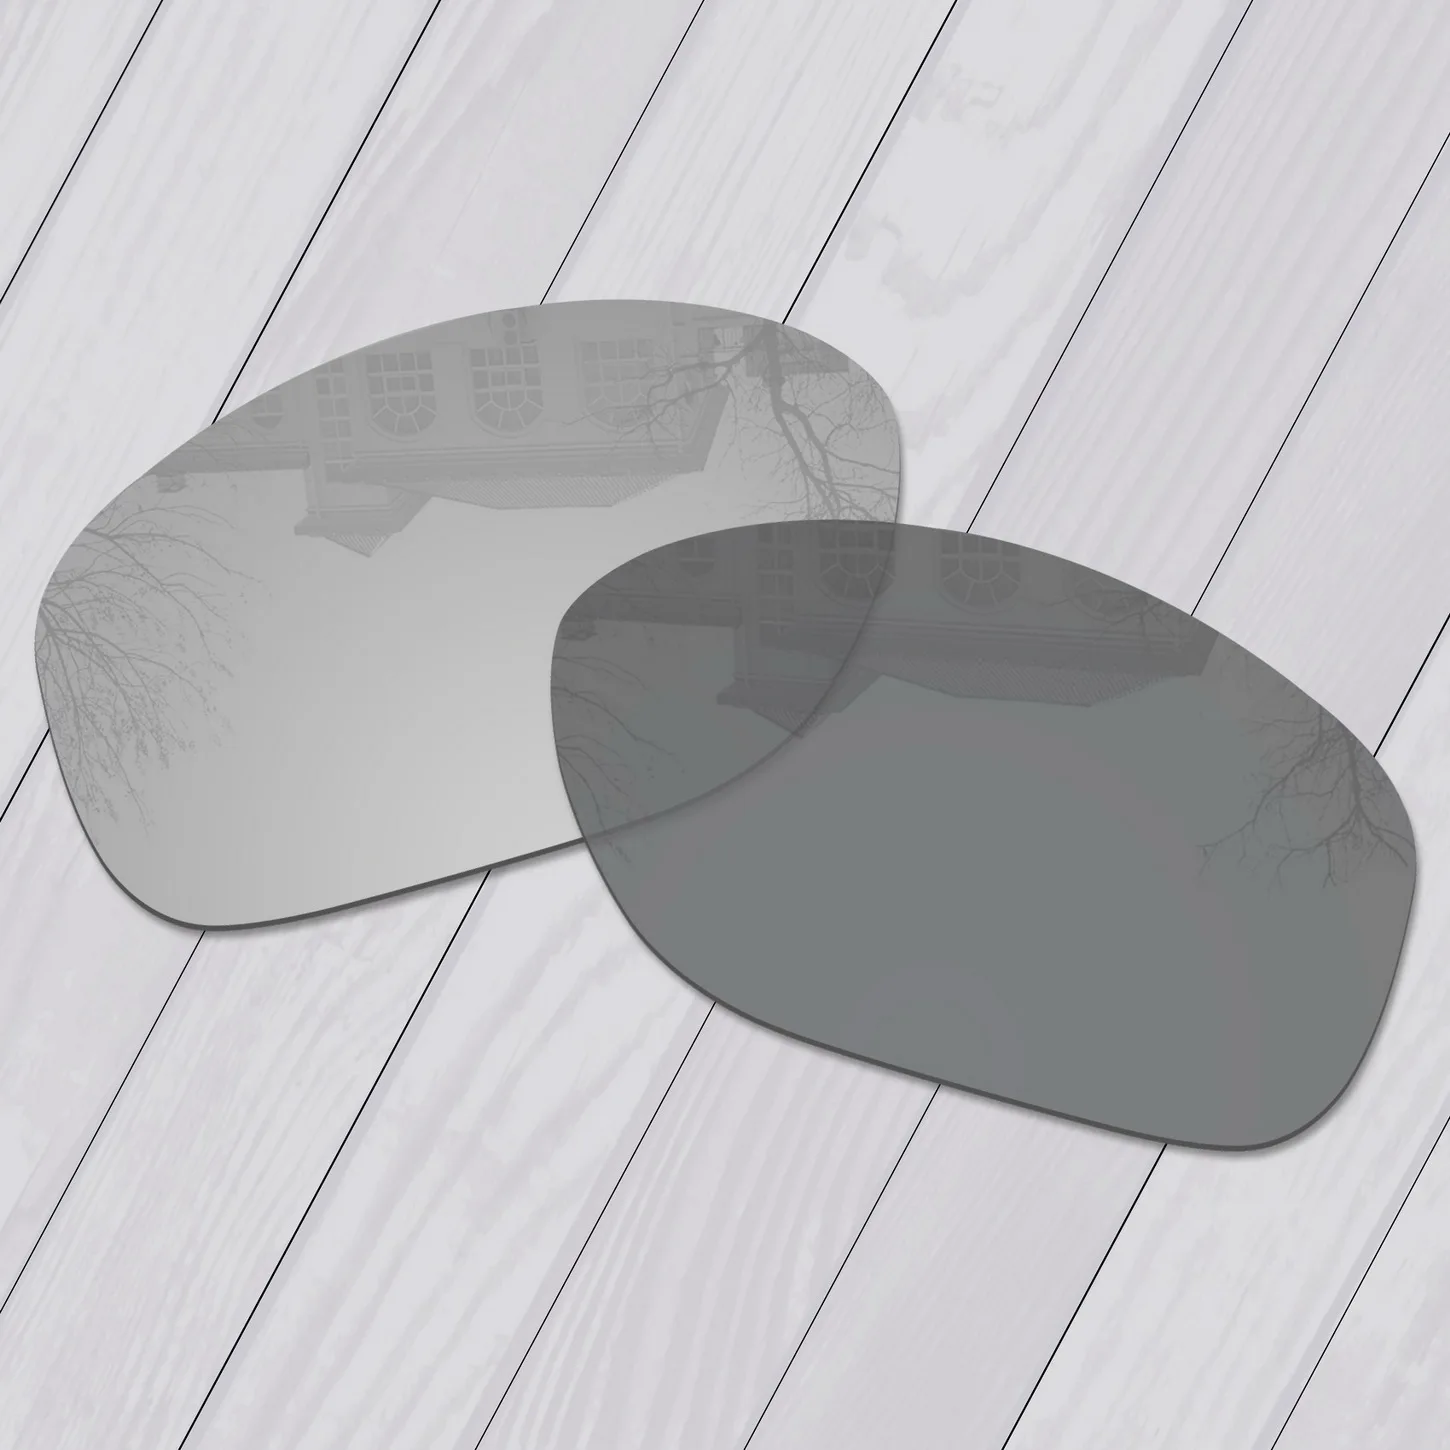 Wholesale E.O.S Polarized Enhanced Replacement Lenses for Oakley Plaintiff Squared Sunglasses - Grey Photochromic Polarized